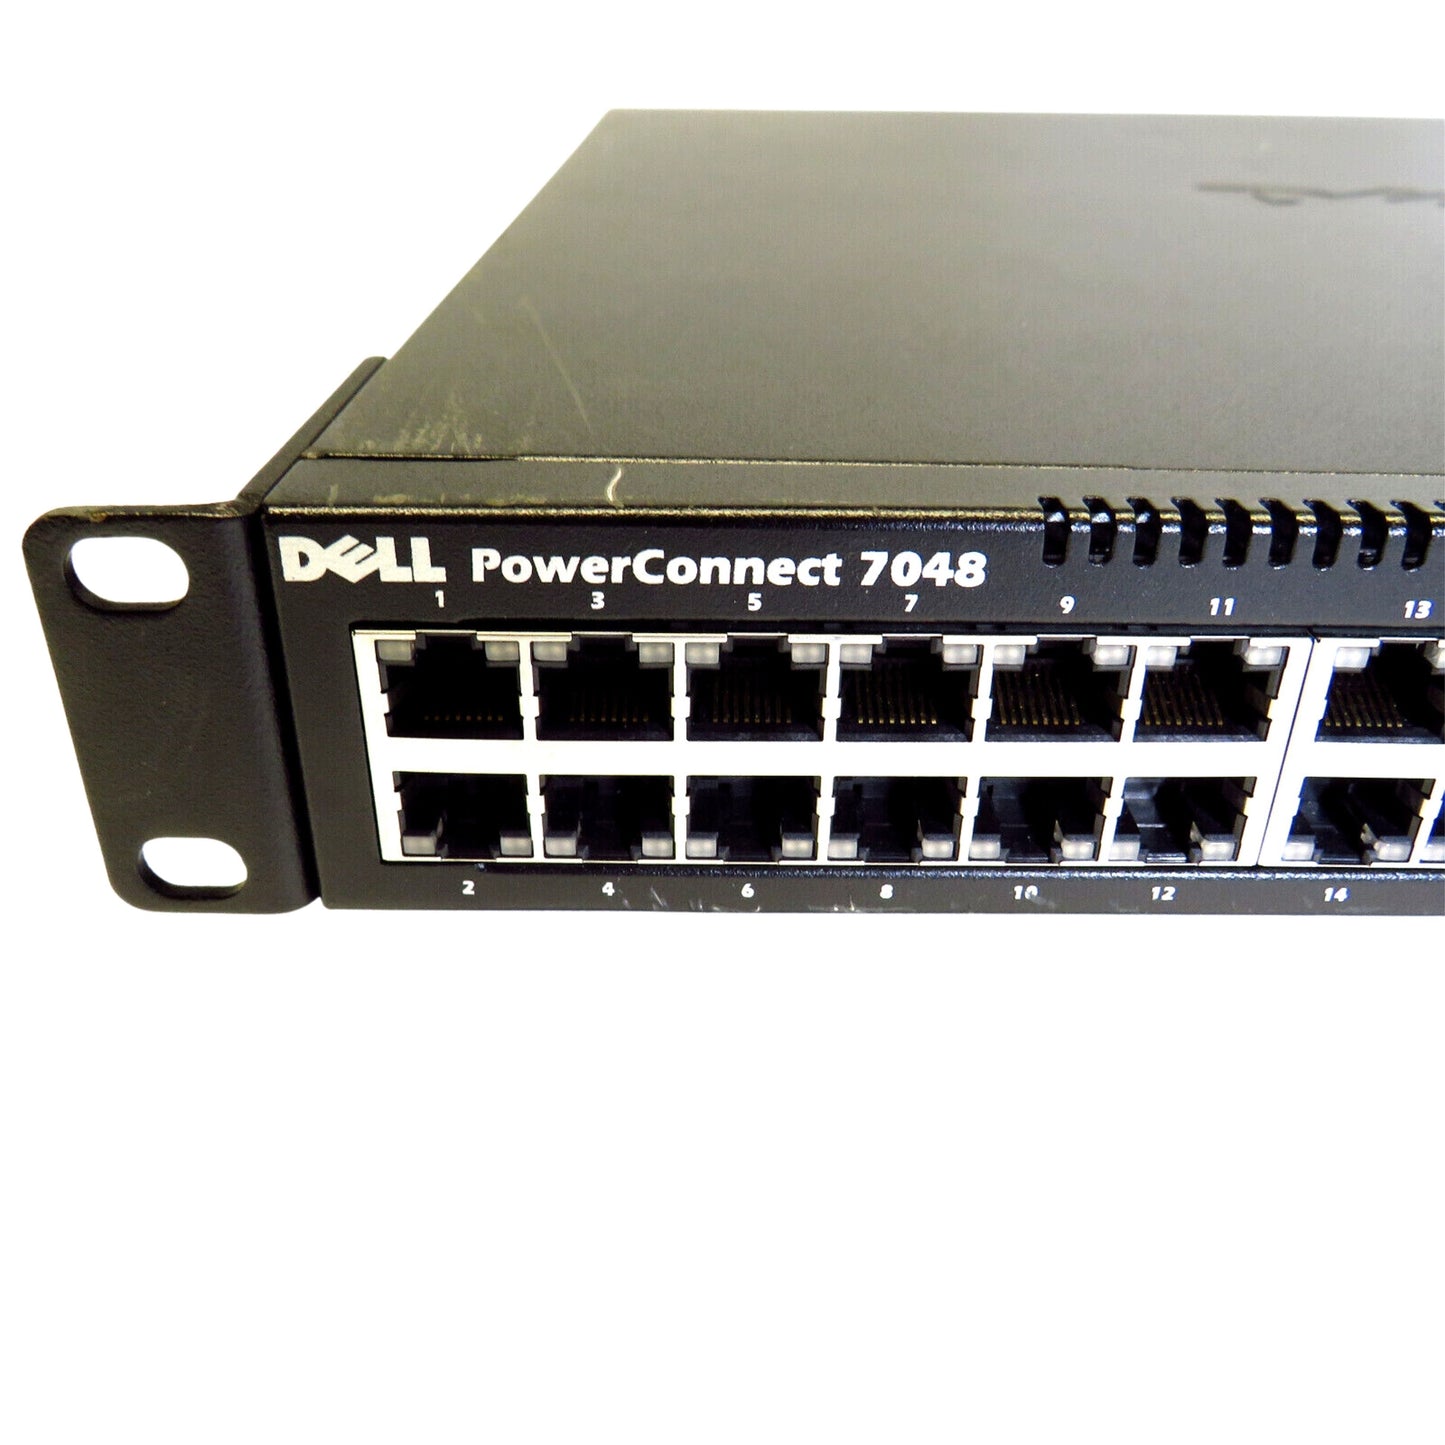 Dell C05J0 PowerConnect 7048 48 Port Managed Gigabit Ethernet Switch (Refurbished)